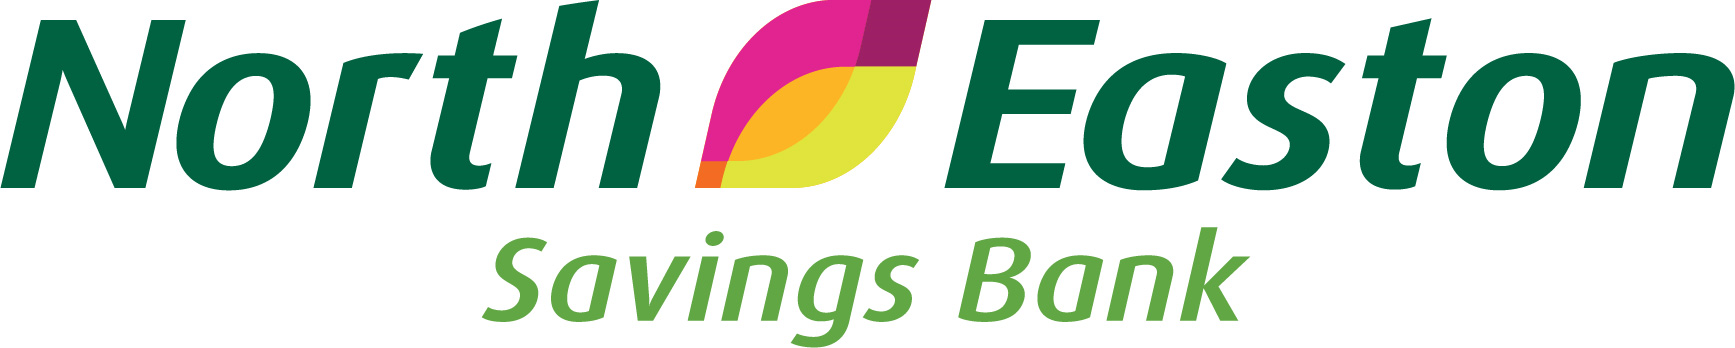 North Easton Savings Bank logo